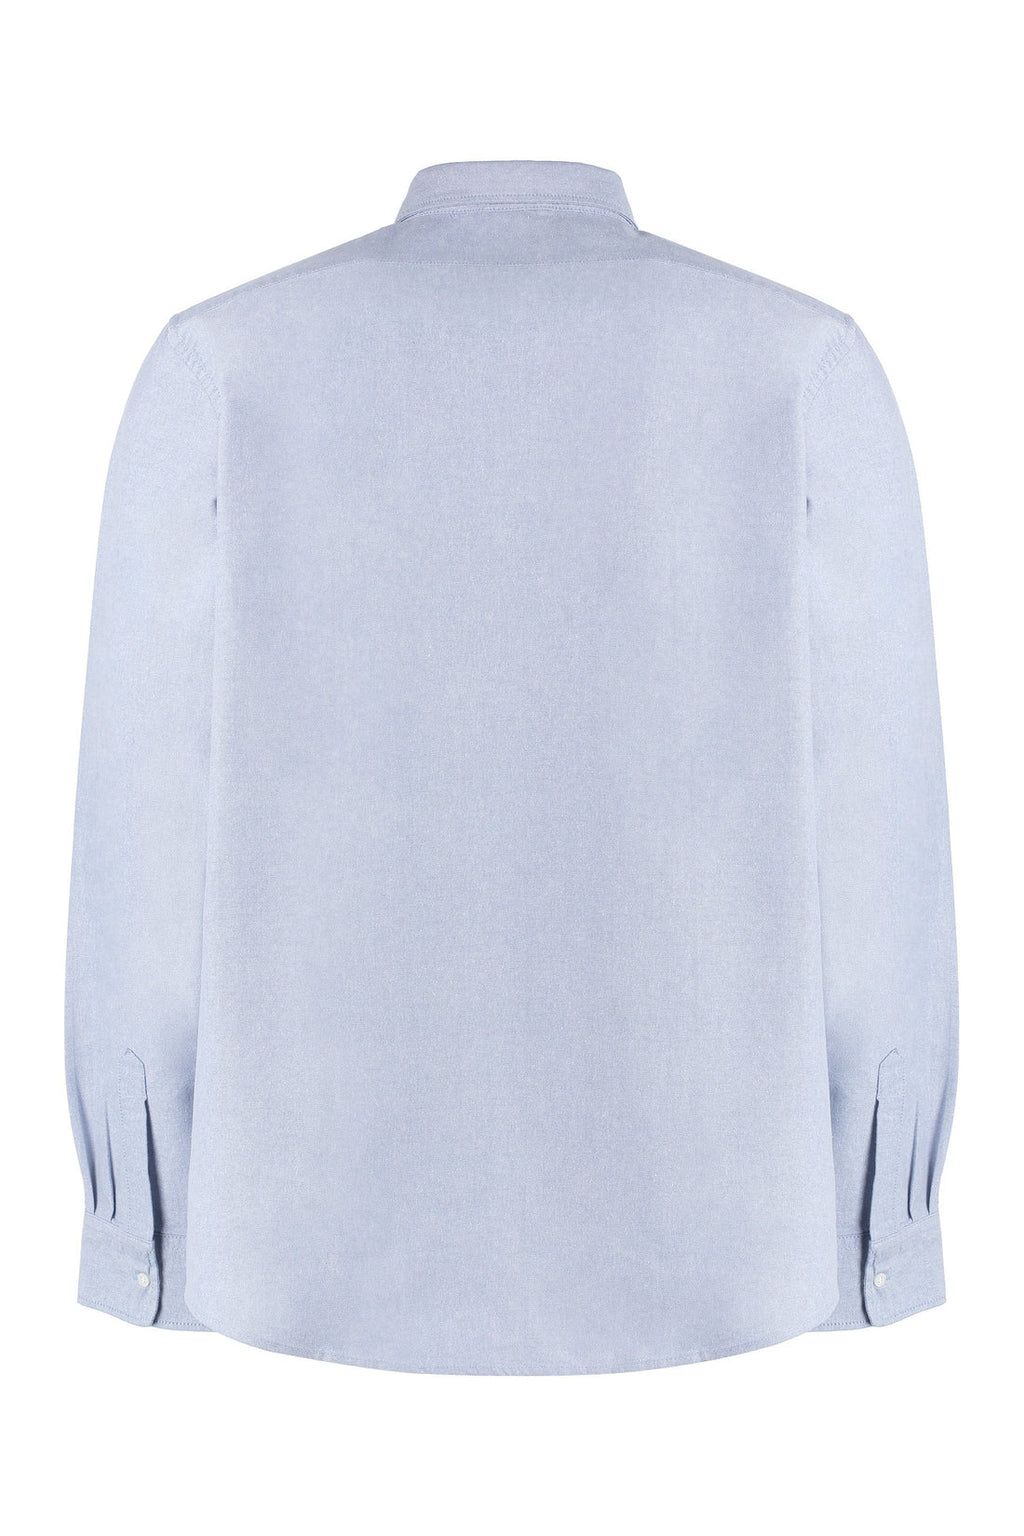 Aspesi-OUTLET-SALE-Sterling Oxford cotton shirt-ARCHIVIST